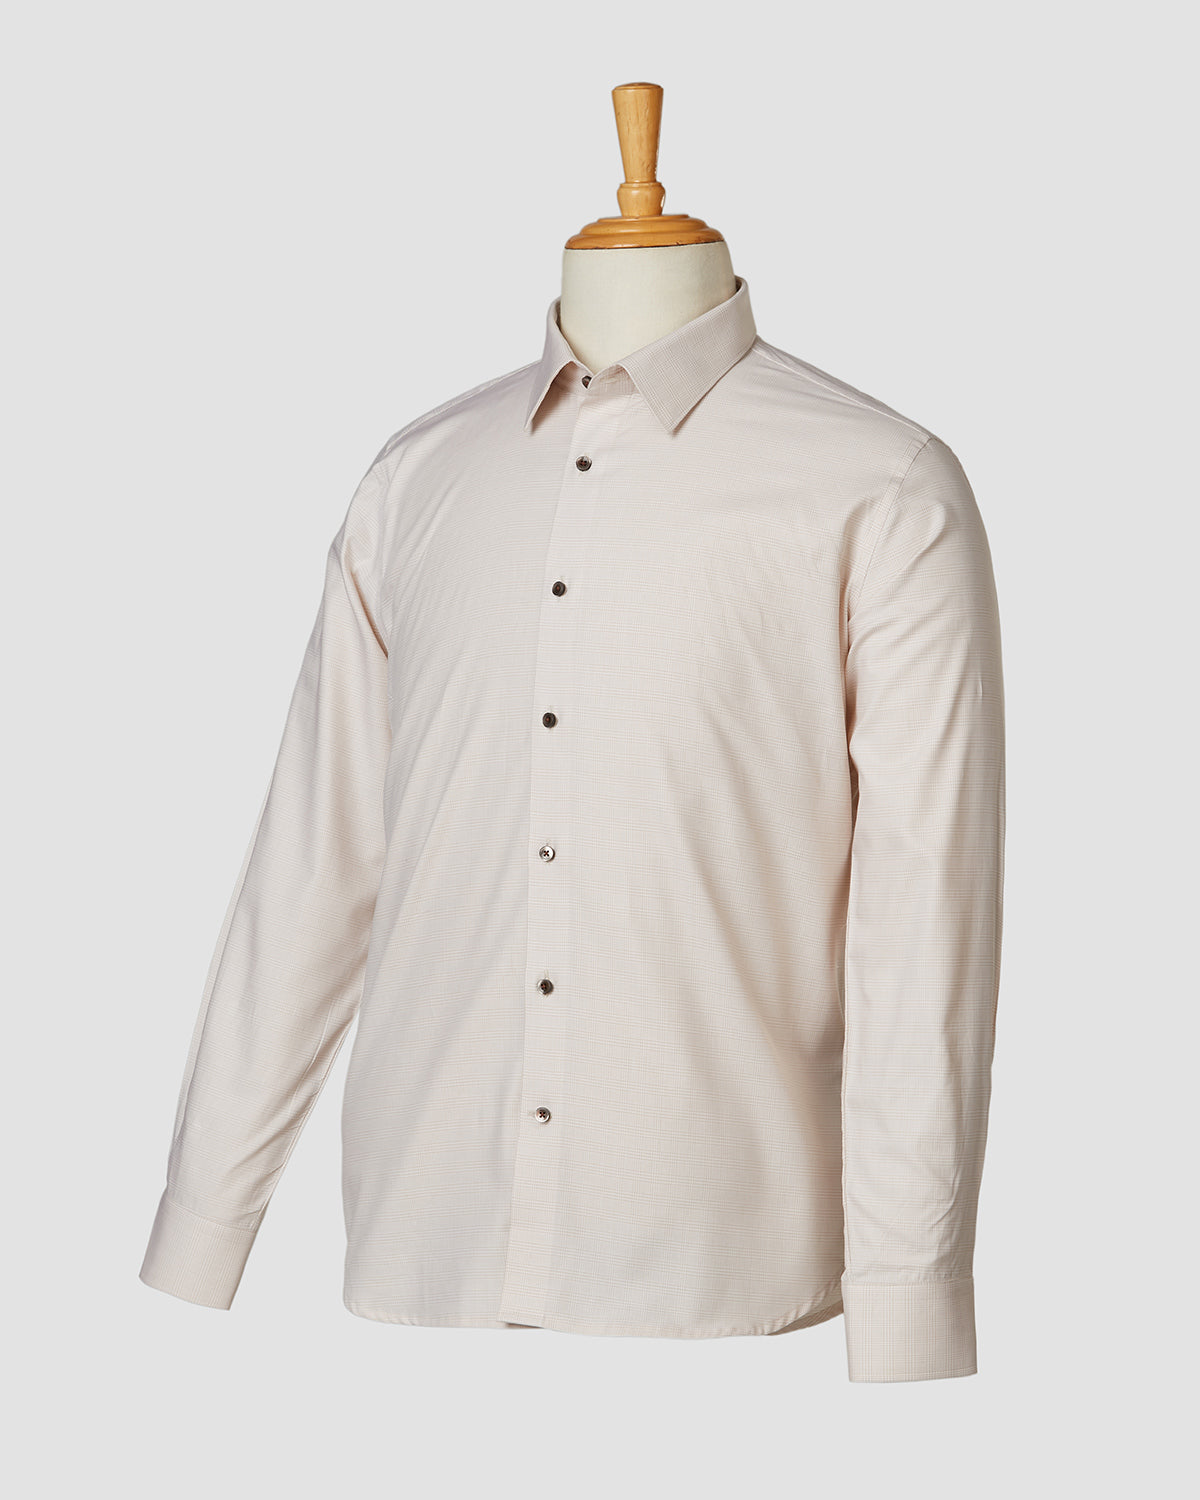 Bombay Shirt Company - Monti Shallow Marsh Checked Shirt